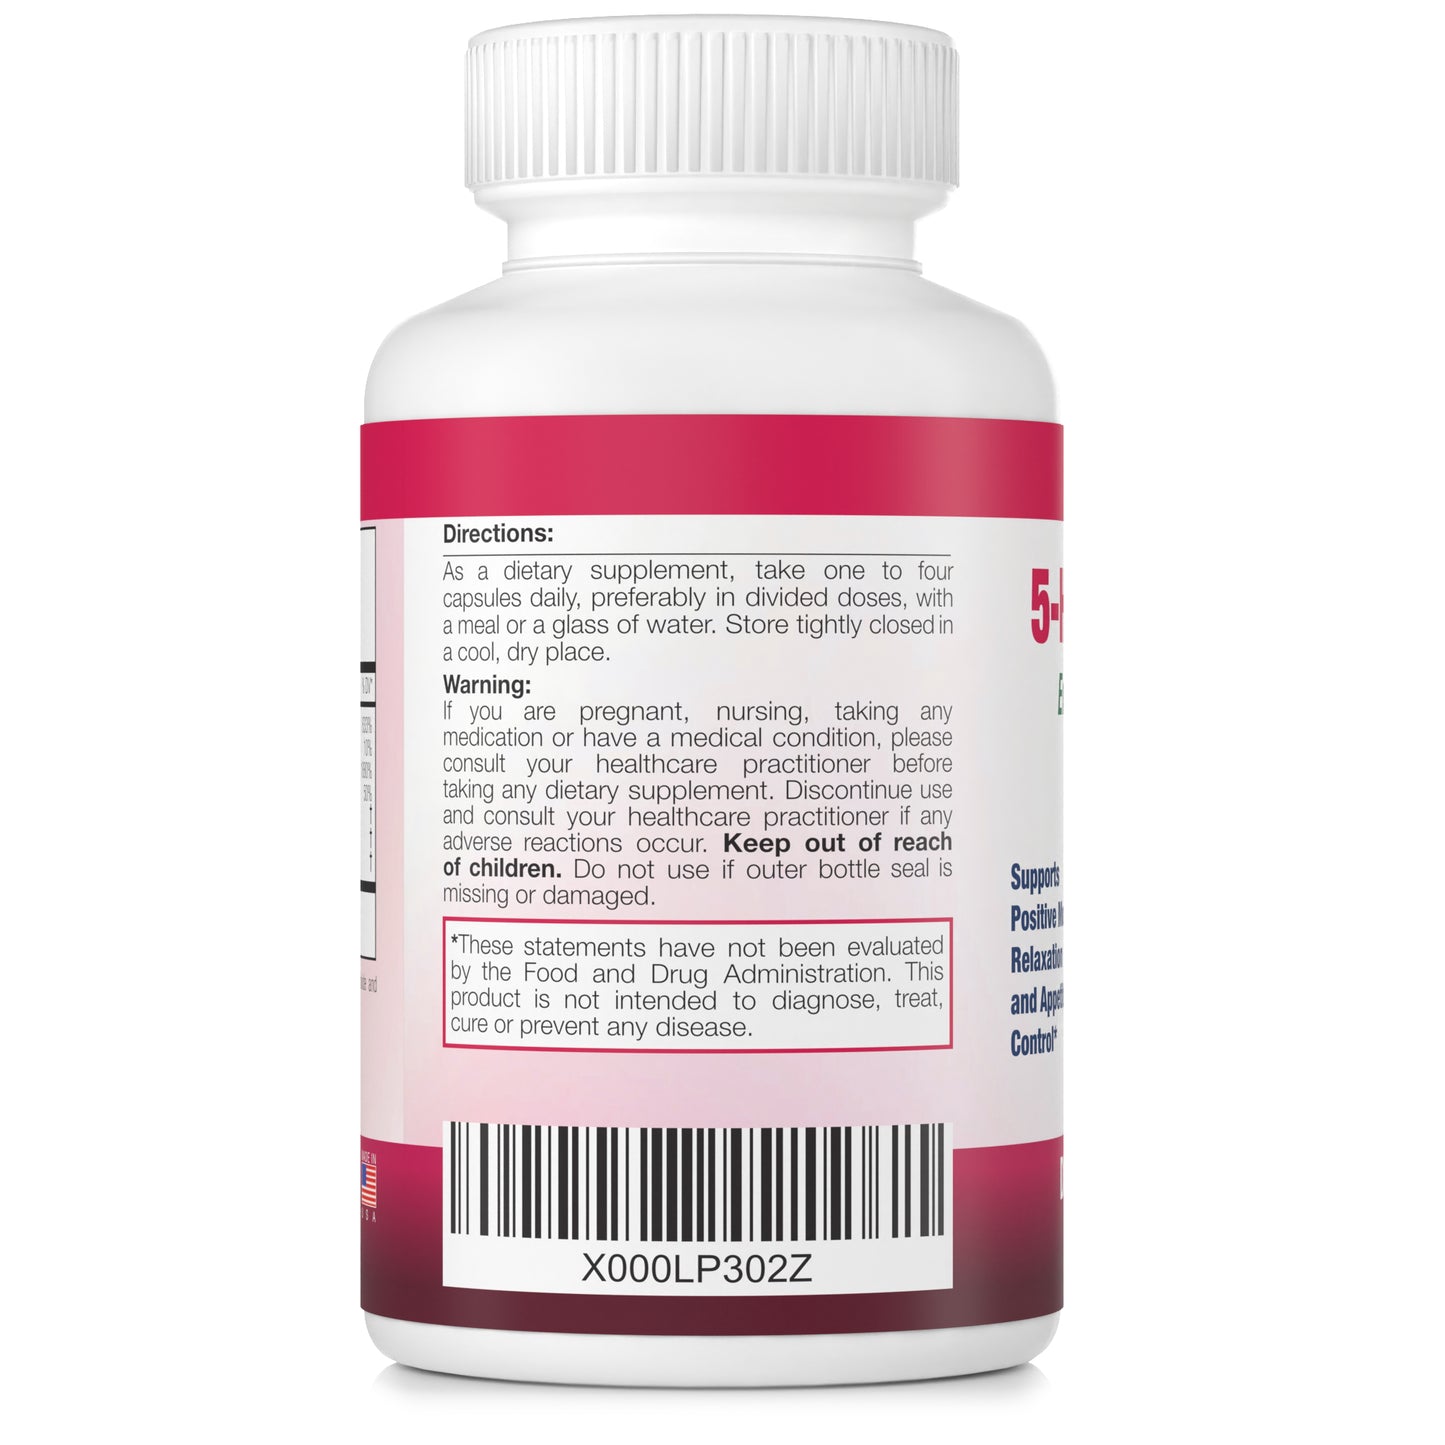 5-HTP SUPREME – Für positive Stimmung, Entspannung und Appetitkontrolle (mit 5-HTP, L-Tyrosin, L-Lysin, Vitamin B6, Folat (Folsäure), Vitamin C (Ascorbinsäure), Calcium) 90 Kapseln